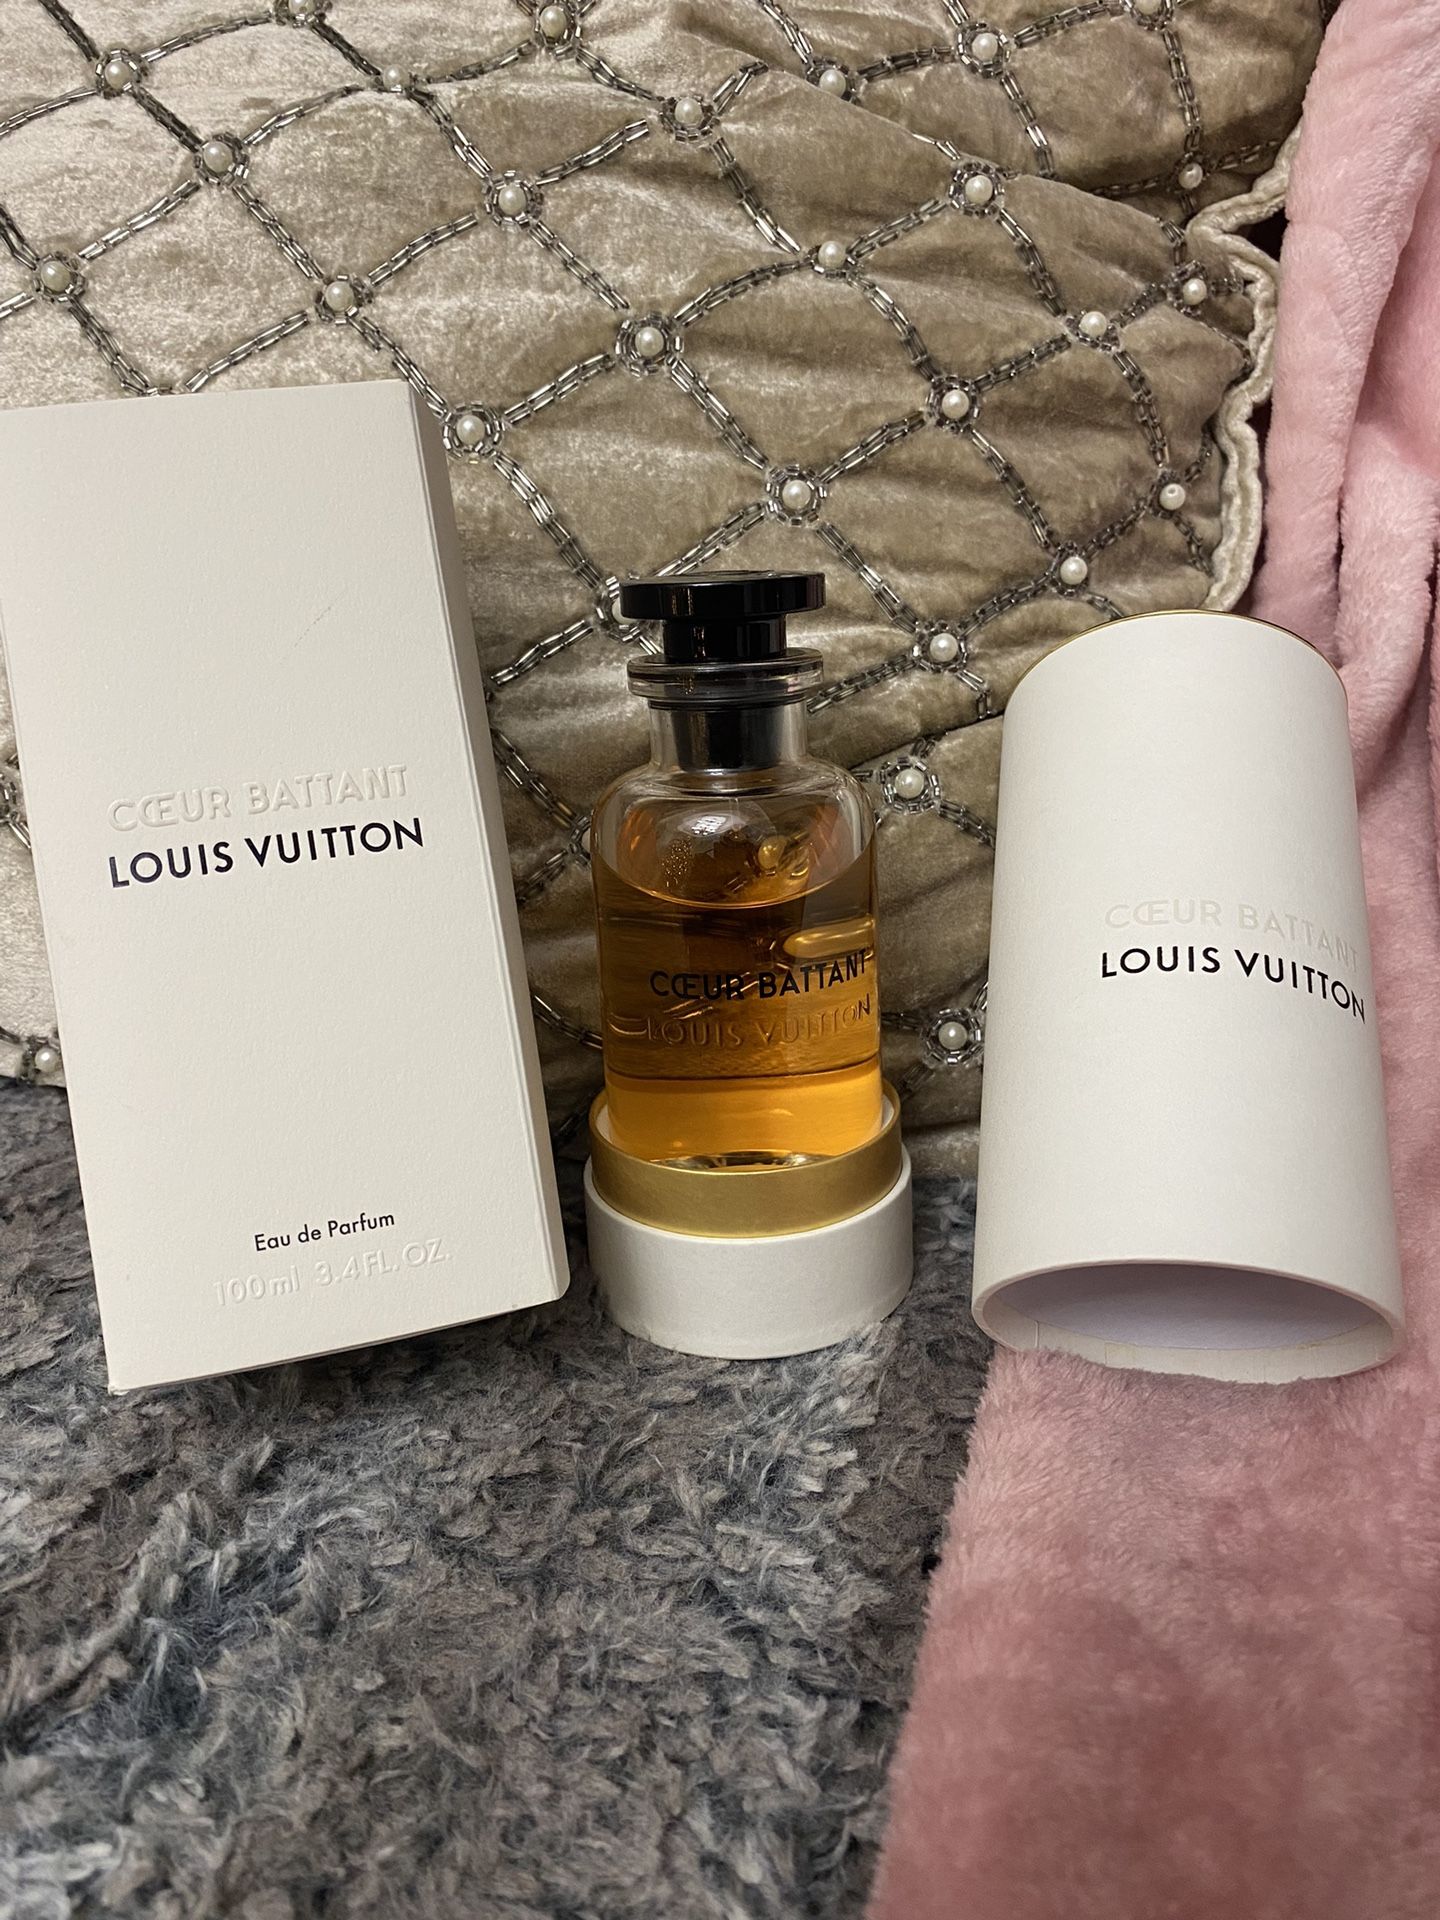 Authentic Louis Vuitton Perfume 